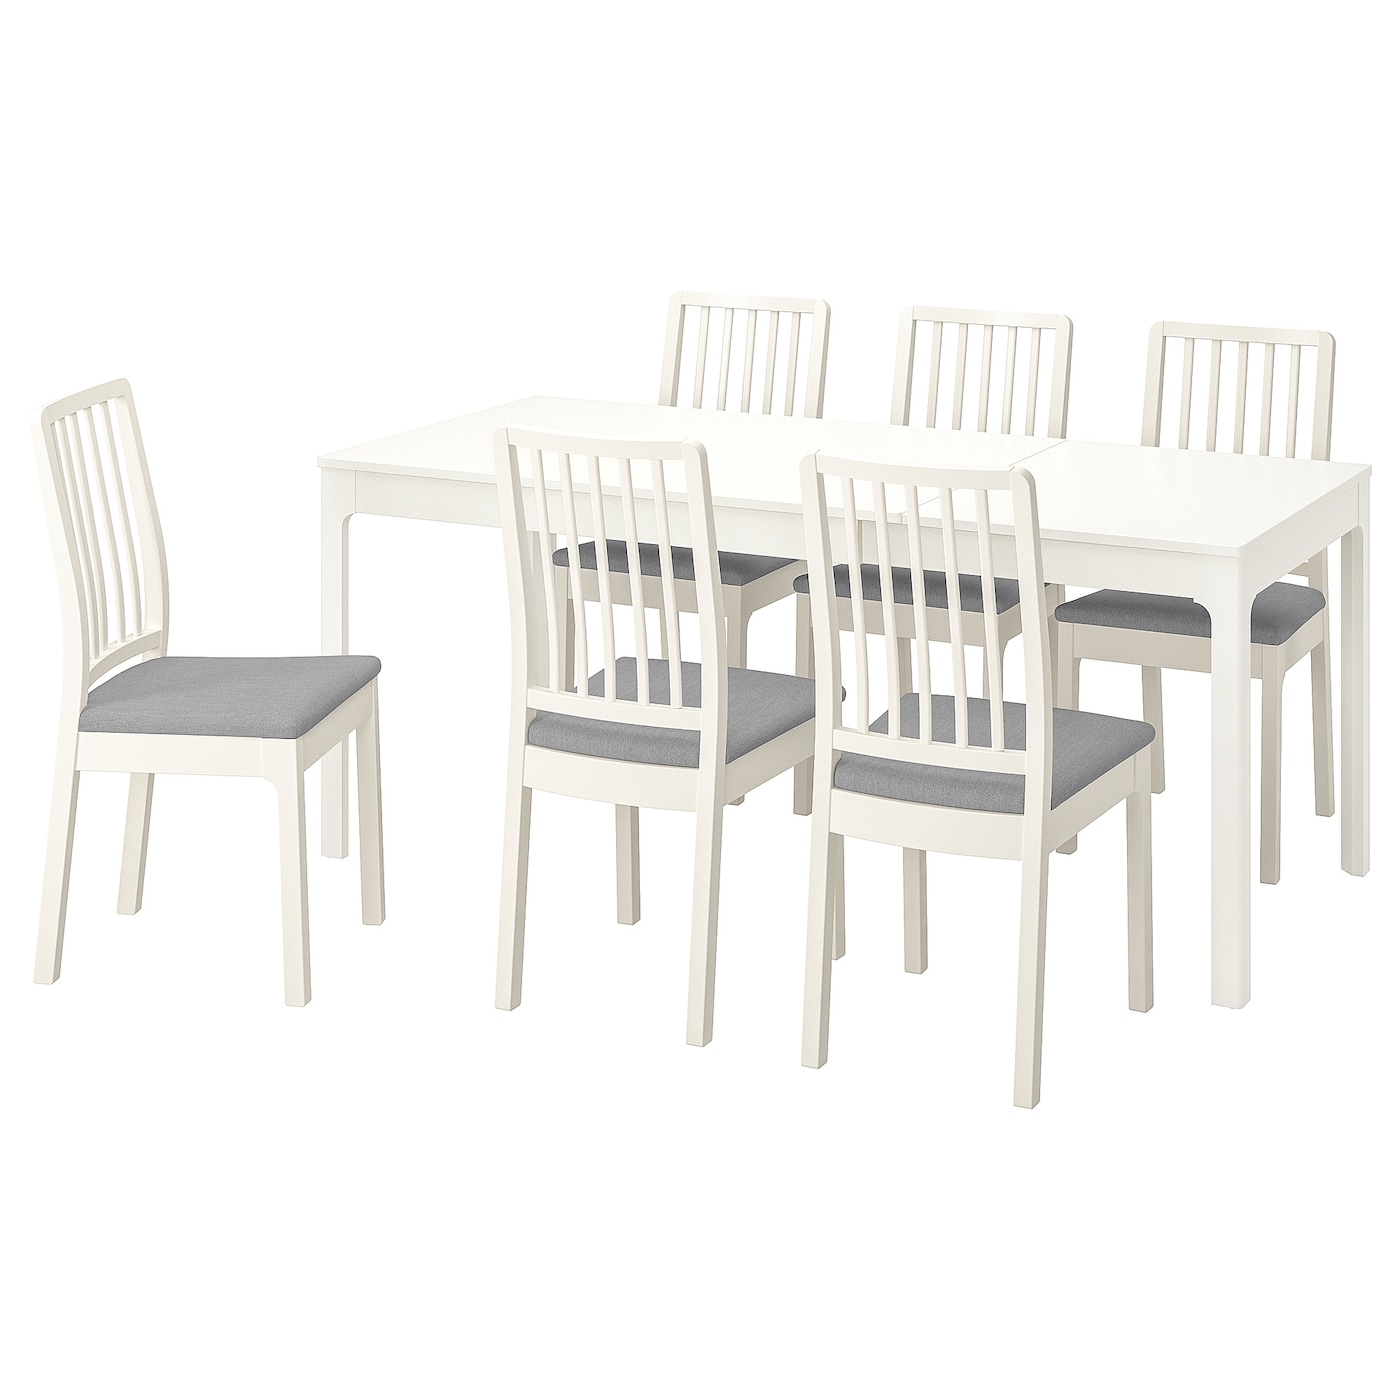 Стол и 6 стульев - IKEA EKEDALEN/ ЭКЕДАЛЕН ИКЕА, 120х180х80 см, белый/серый